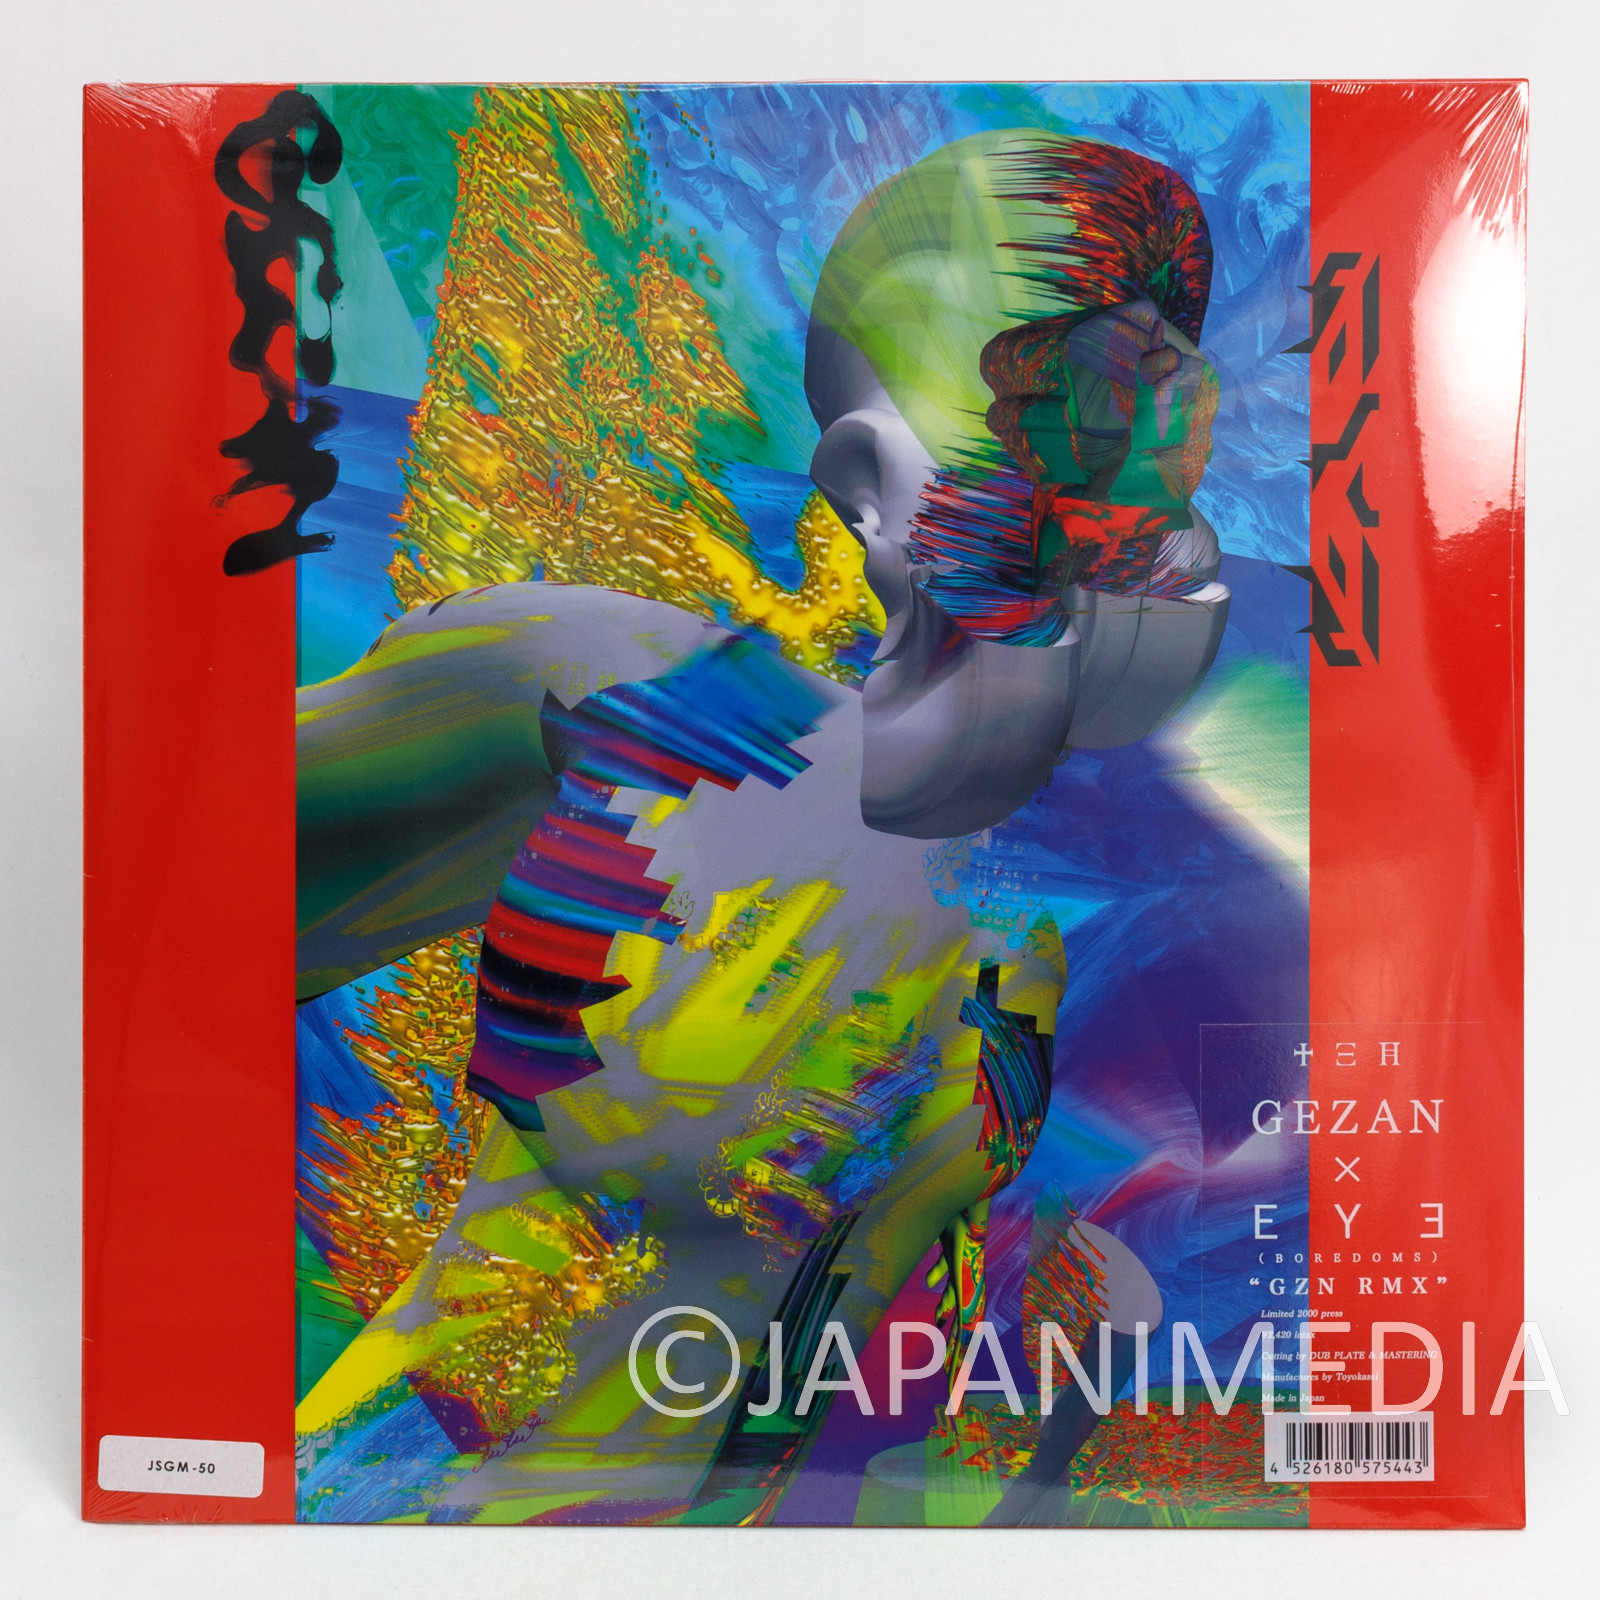 GEZAN x EYE GZN RMX 12" Vinyl Record Limited 2000 Press / YAMATSUKA BOREDOMS